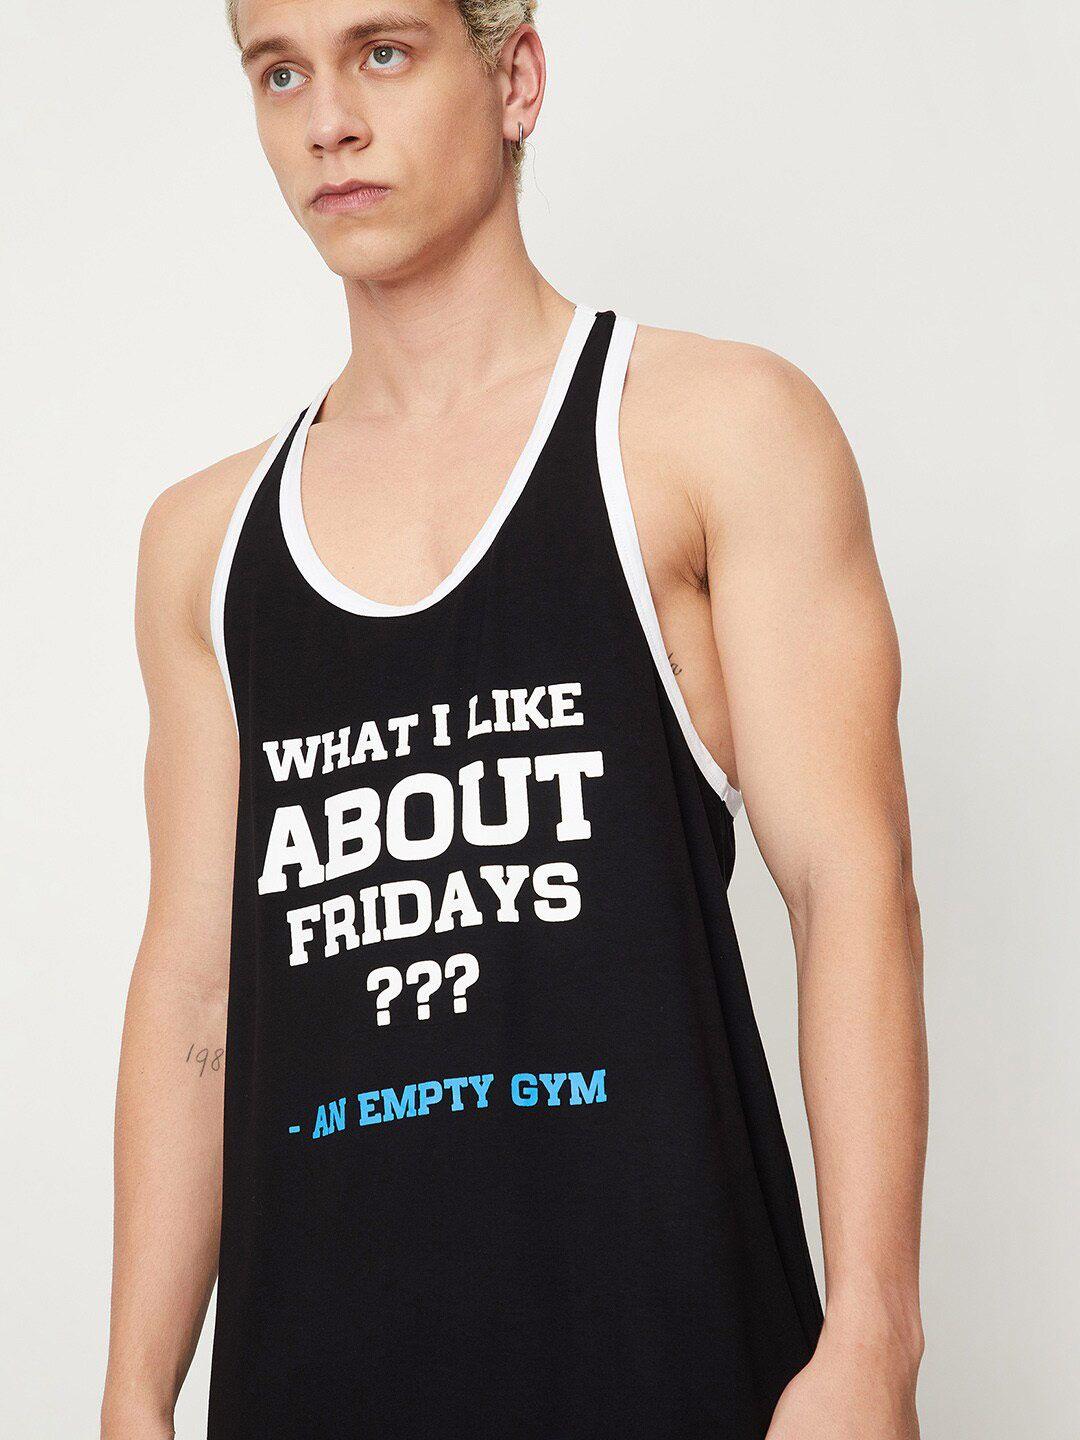 max-typography-printed-sleeveless-training-or-gym-t-shirt